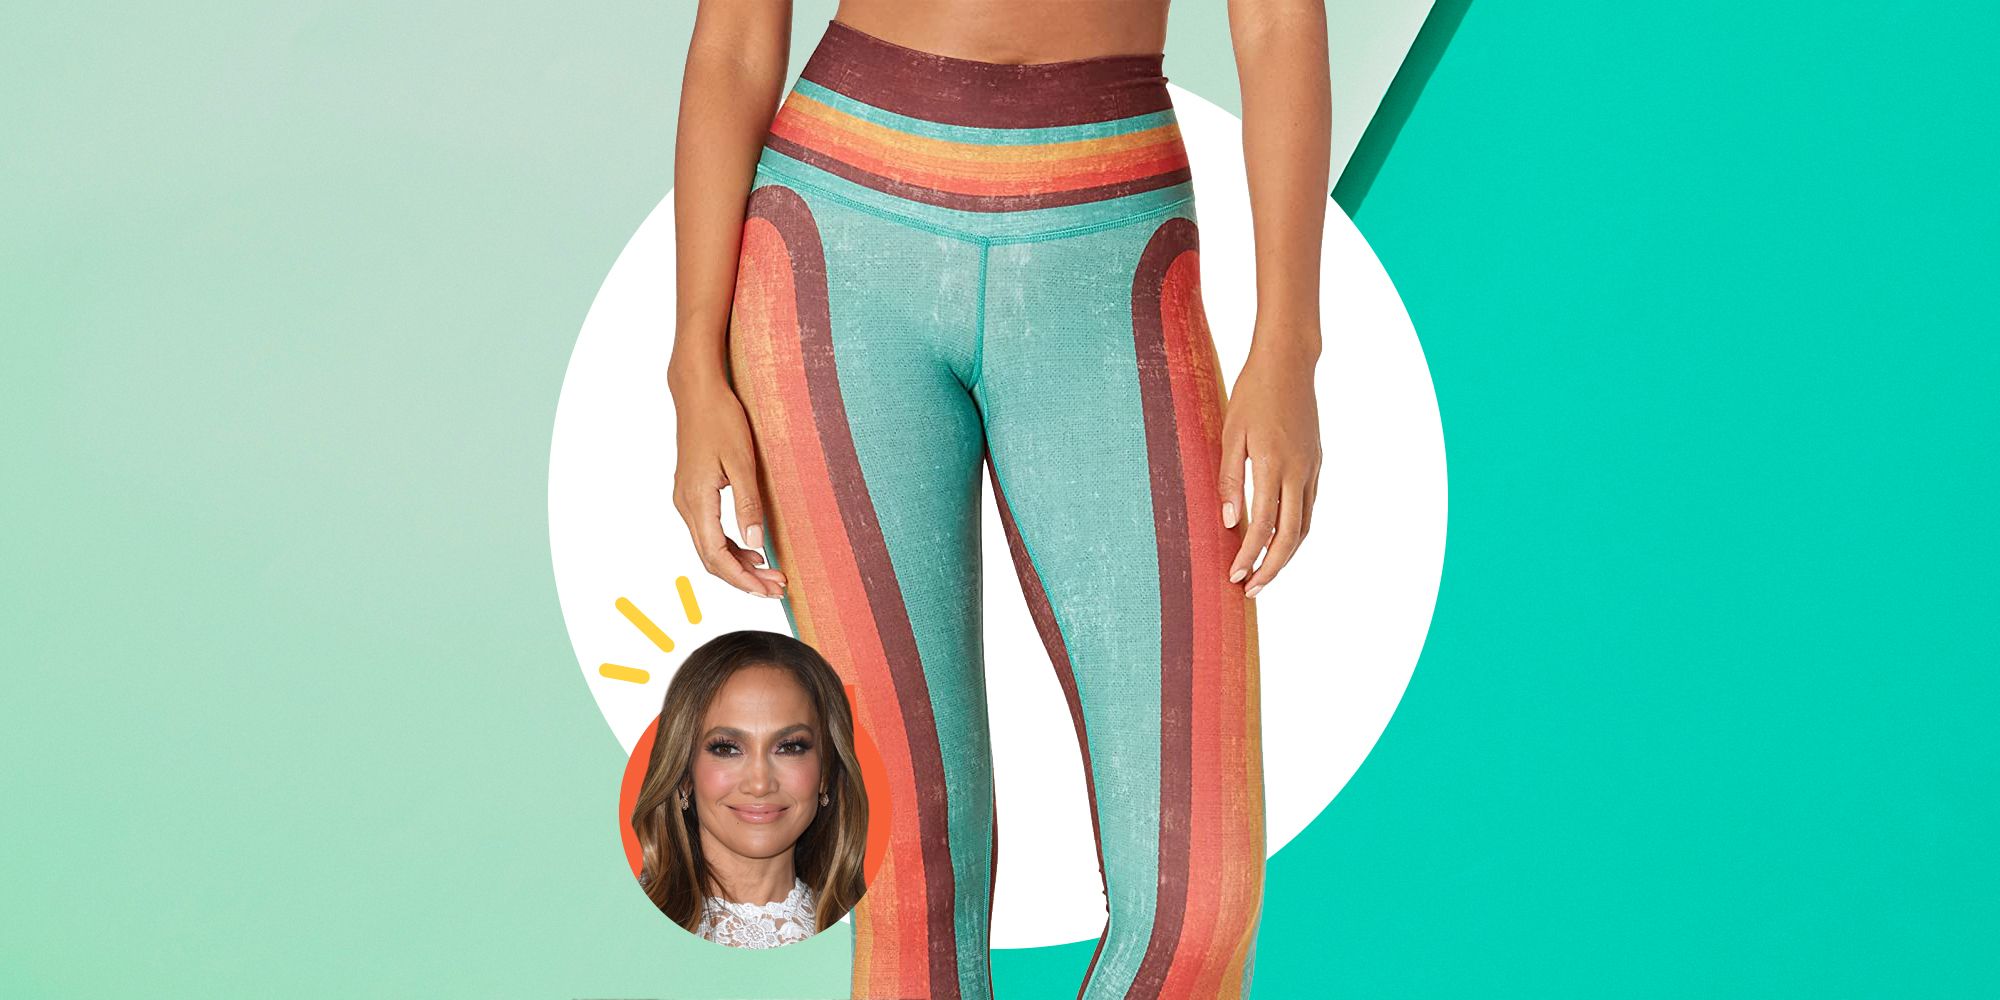 Jennifer Lopez Says These Amazon Leggings Make Your Butt Look Amazing